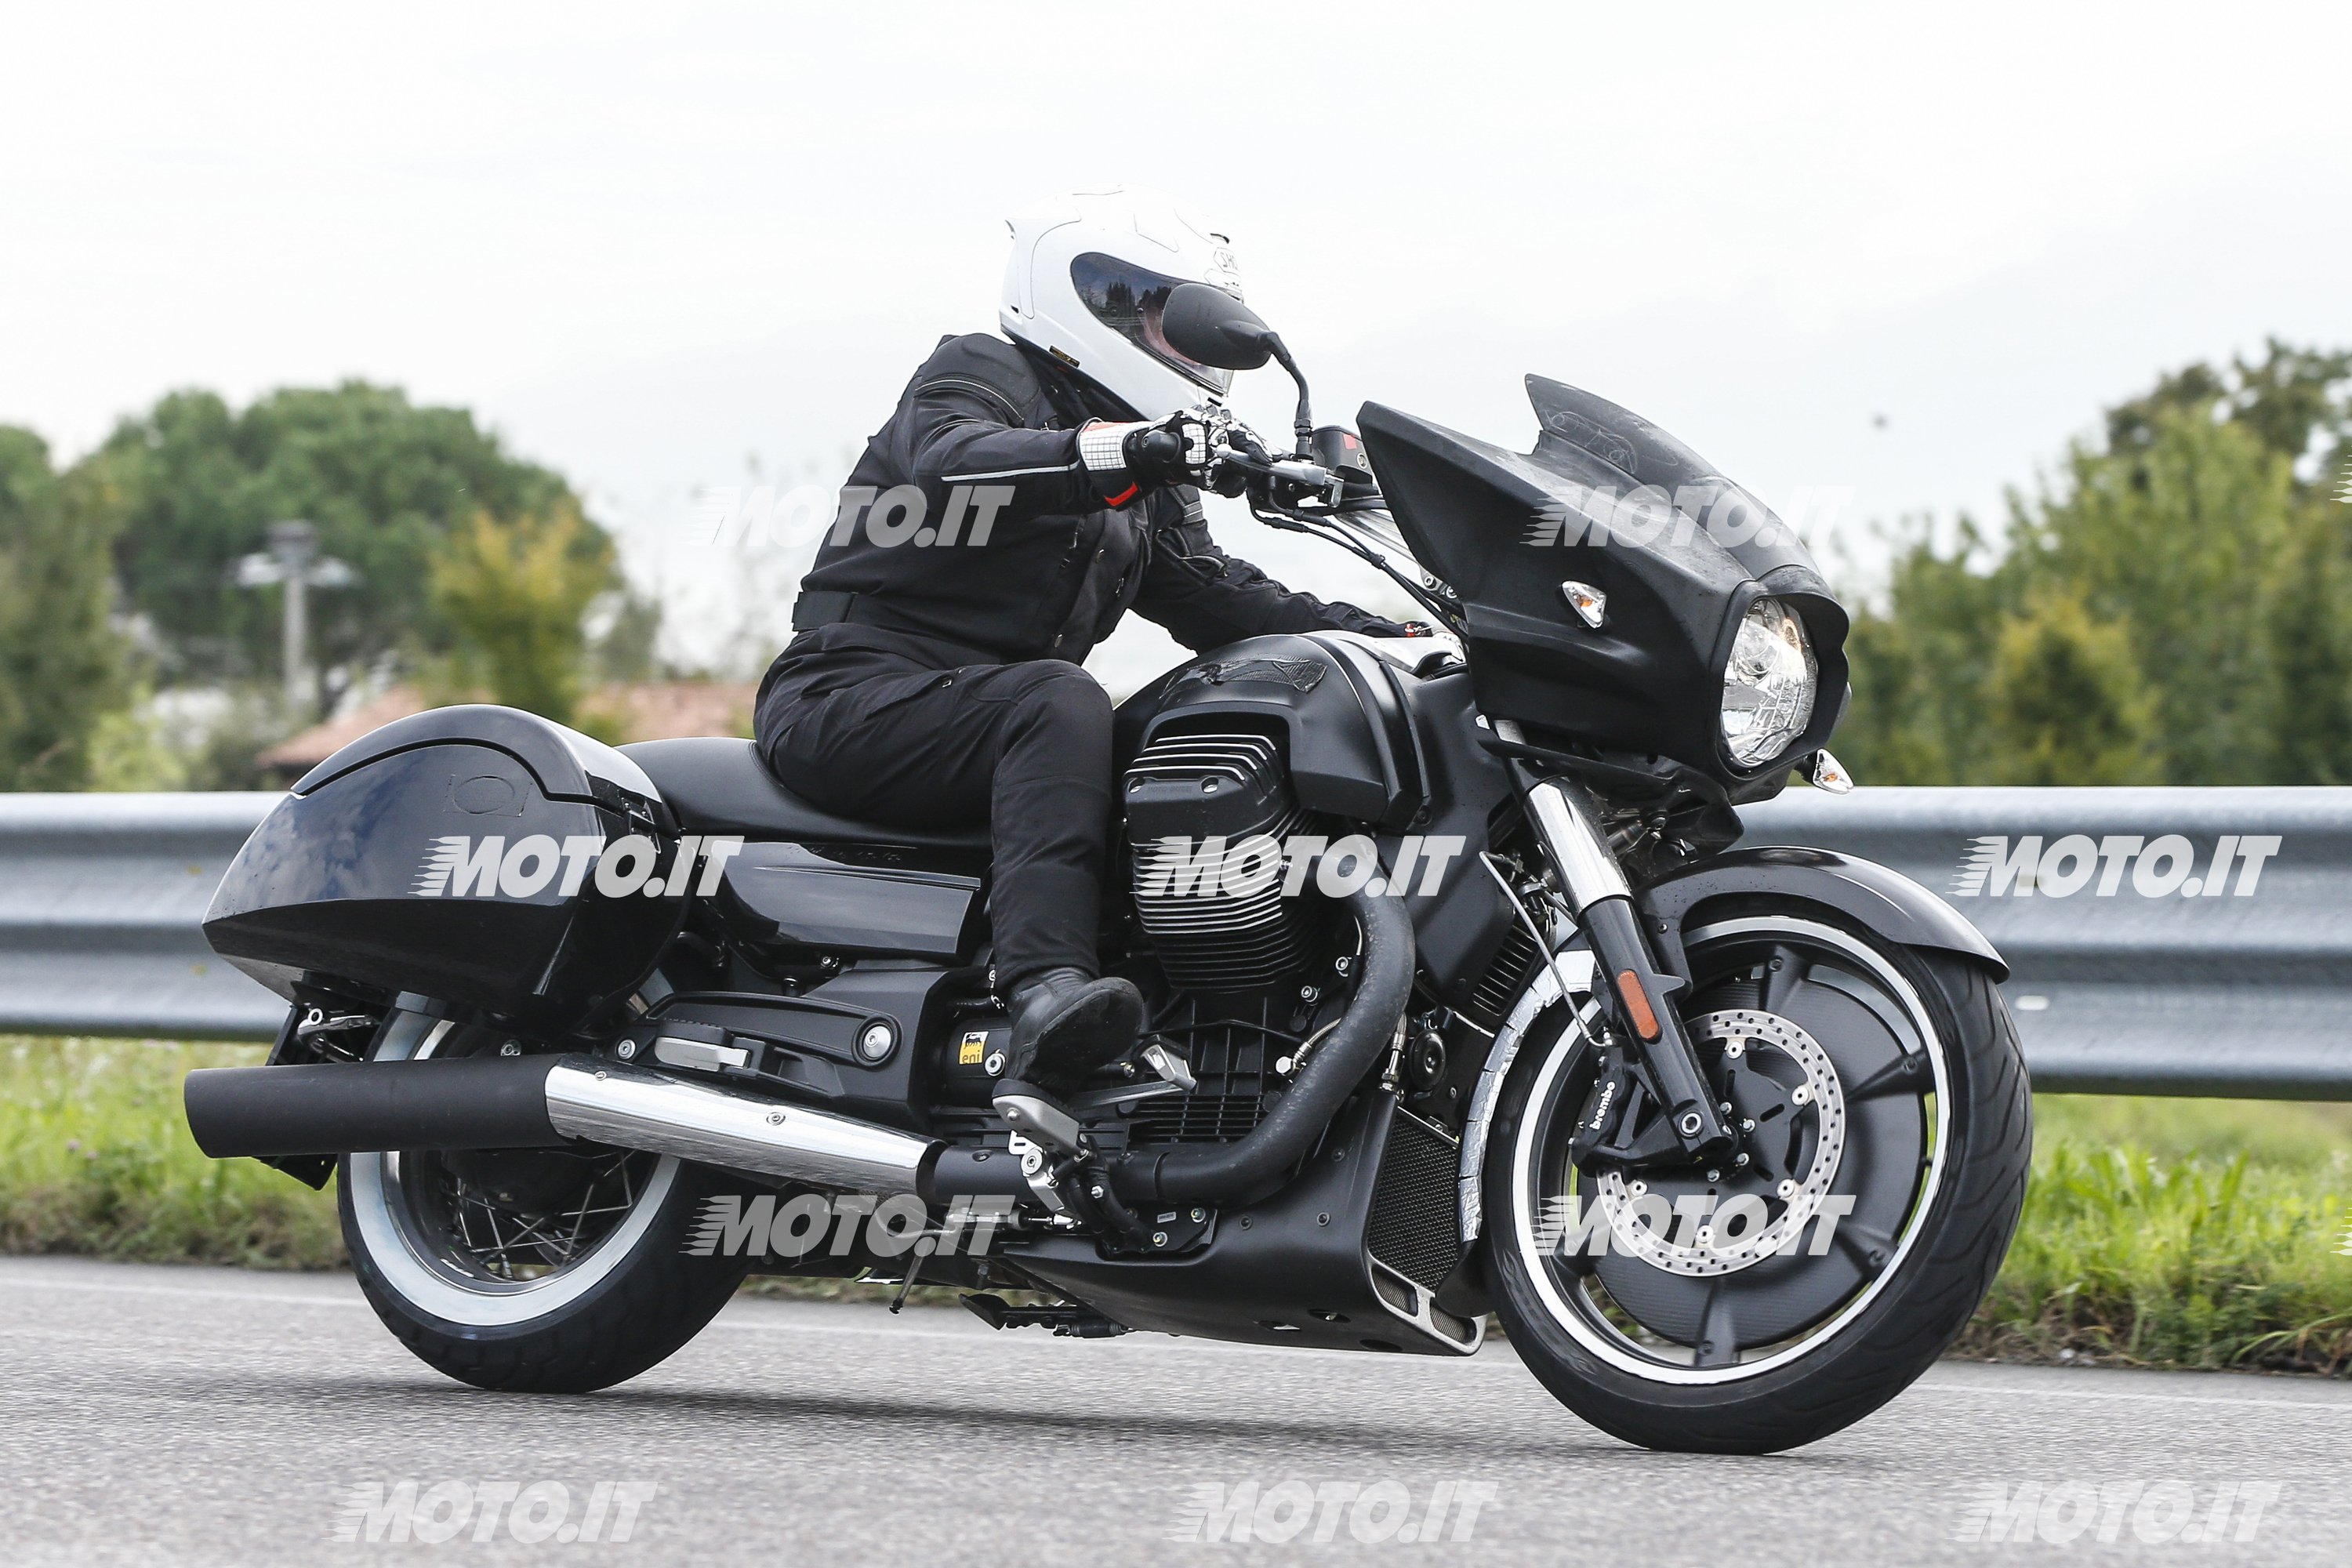 Foto Spia: Moto Guzzi California Bagger